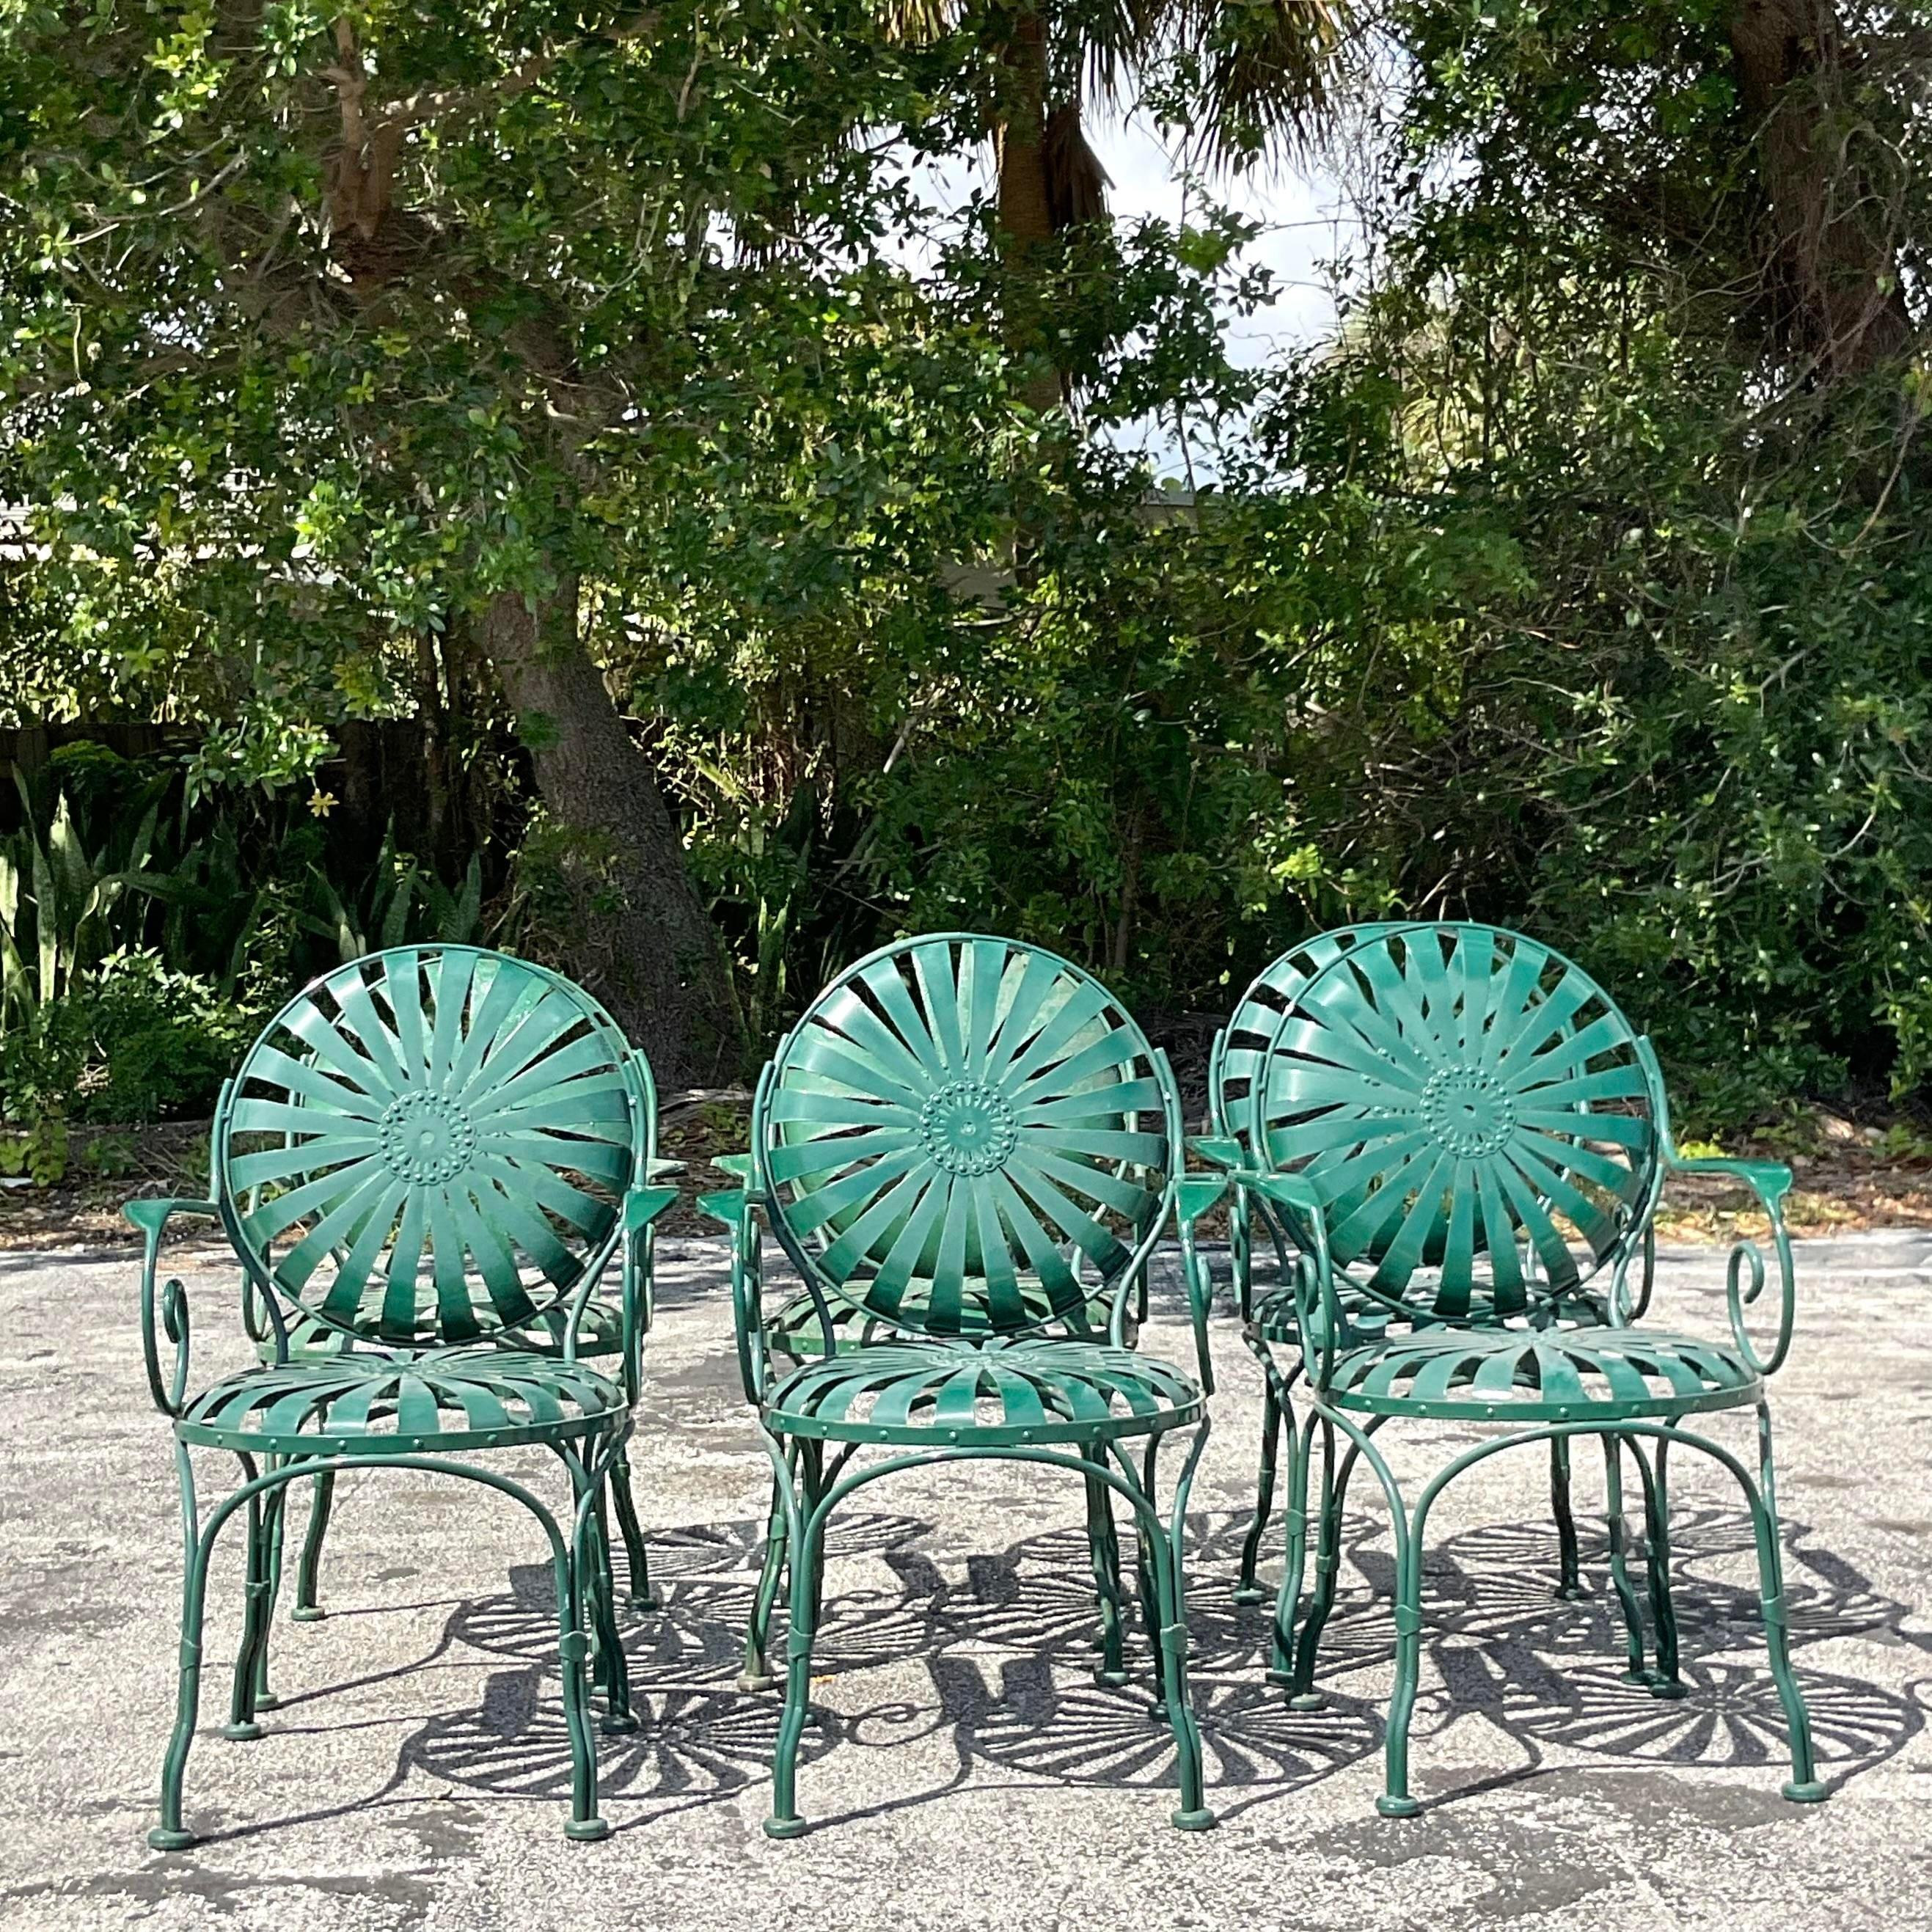 20th Century Vintage Coastal Francois Carre Sunburst Wrought Iron Chairs - Set of 6